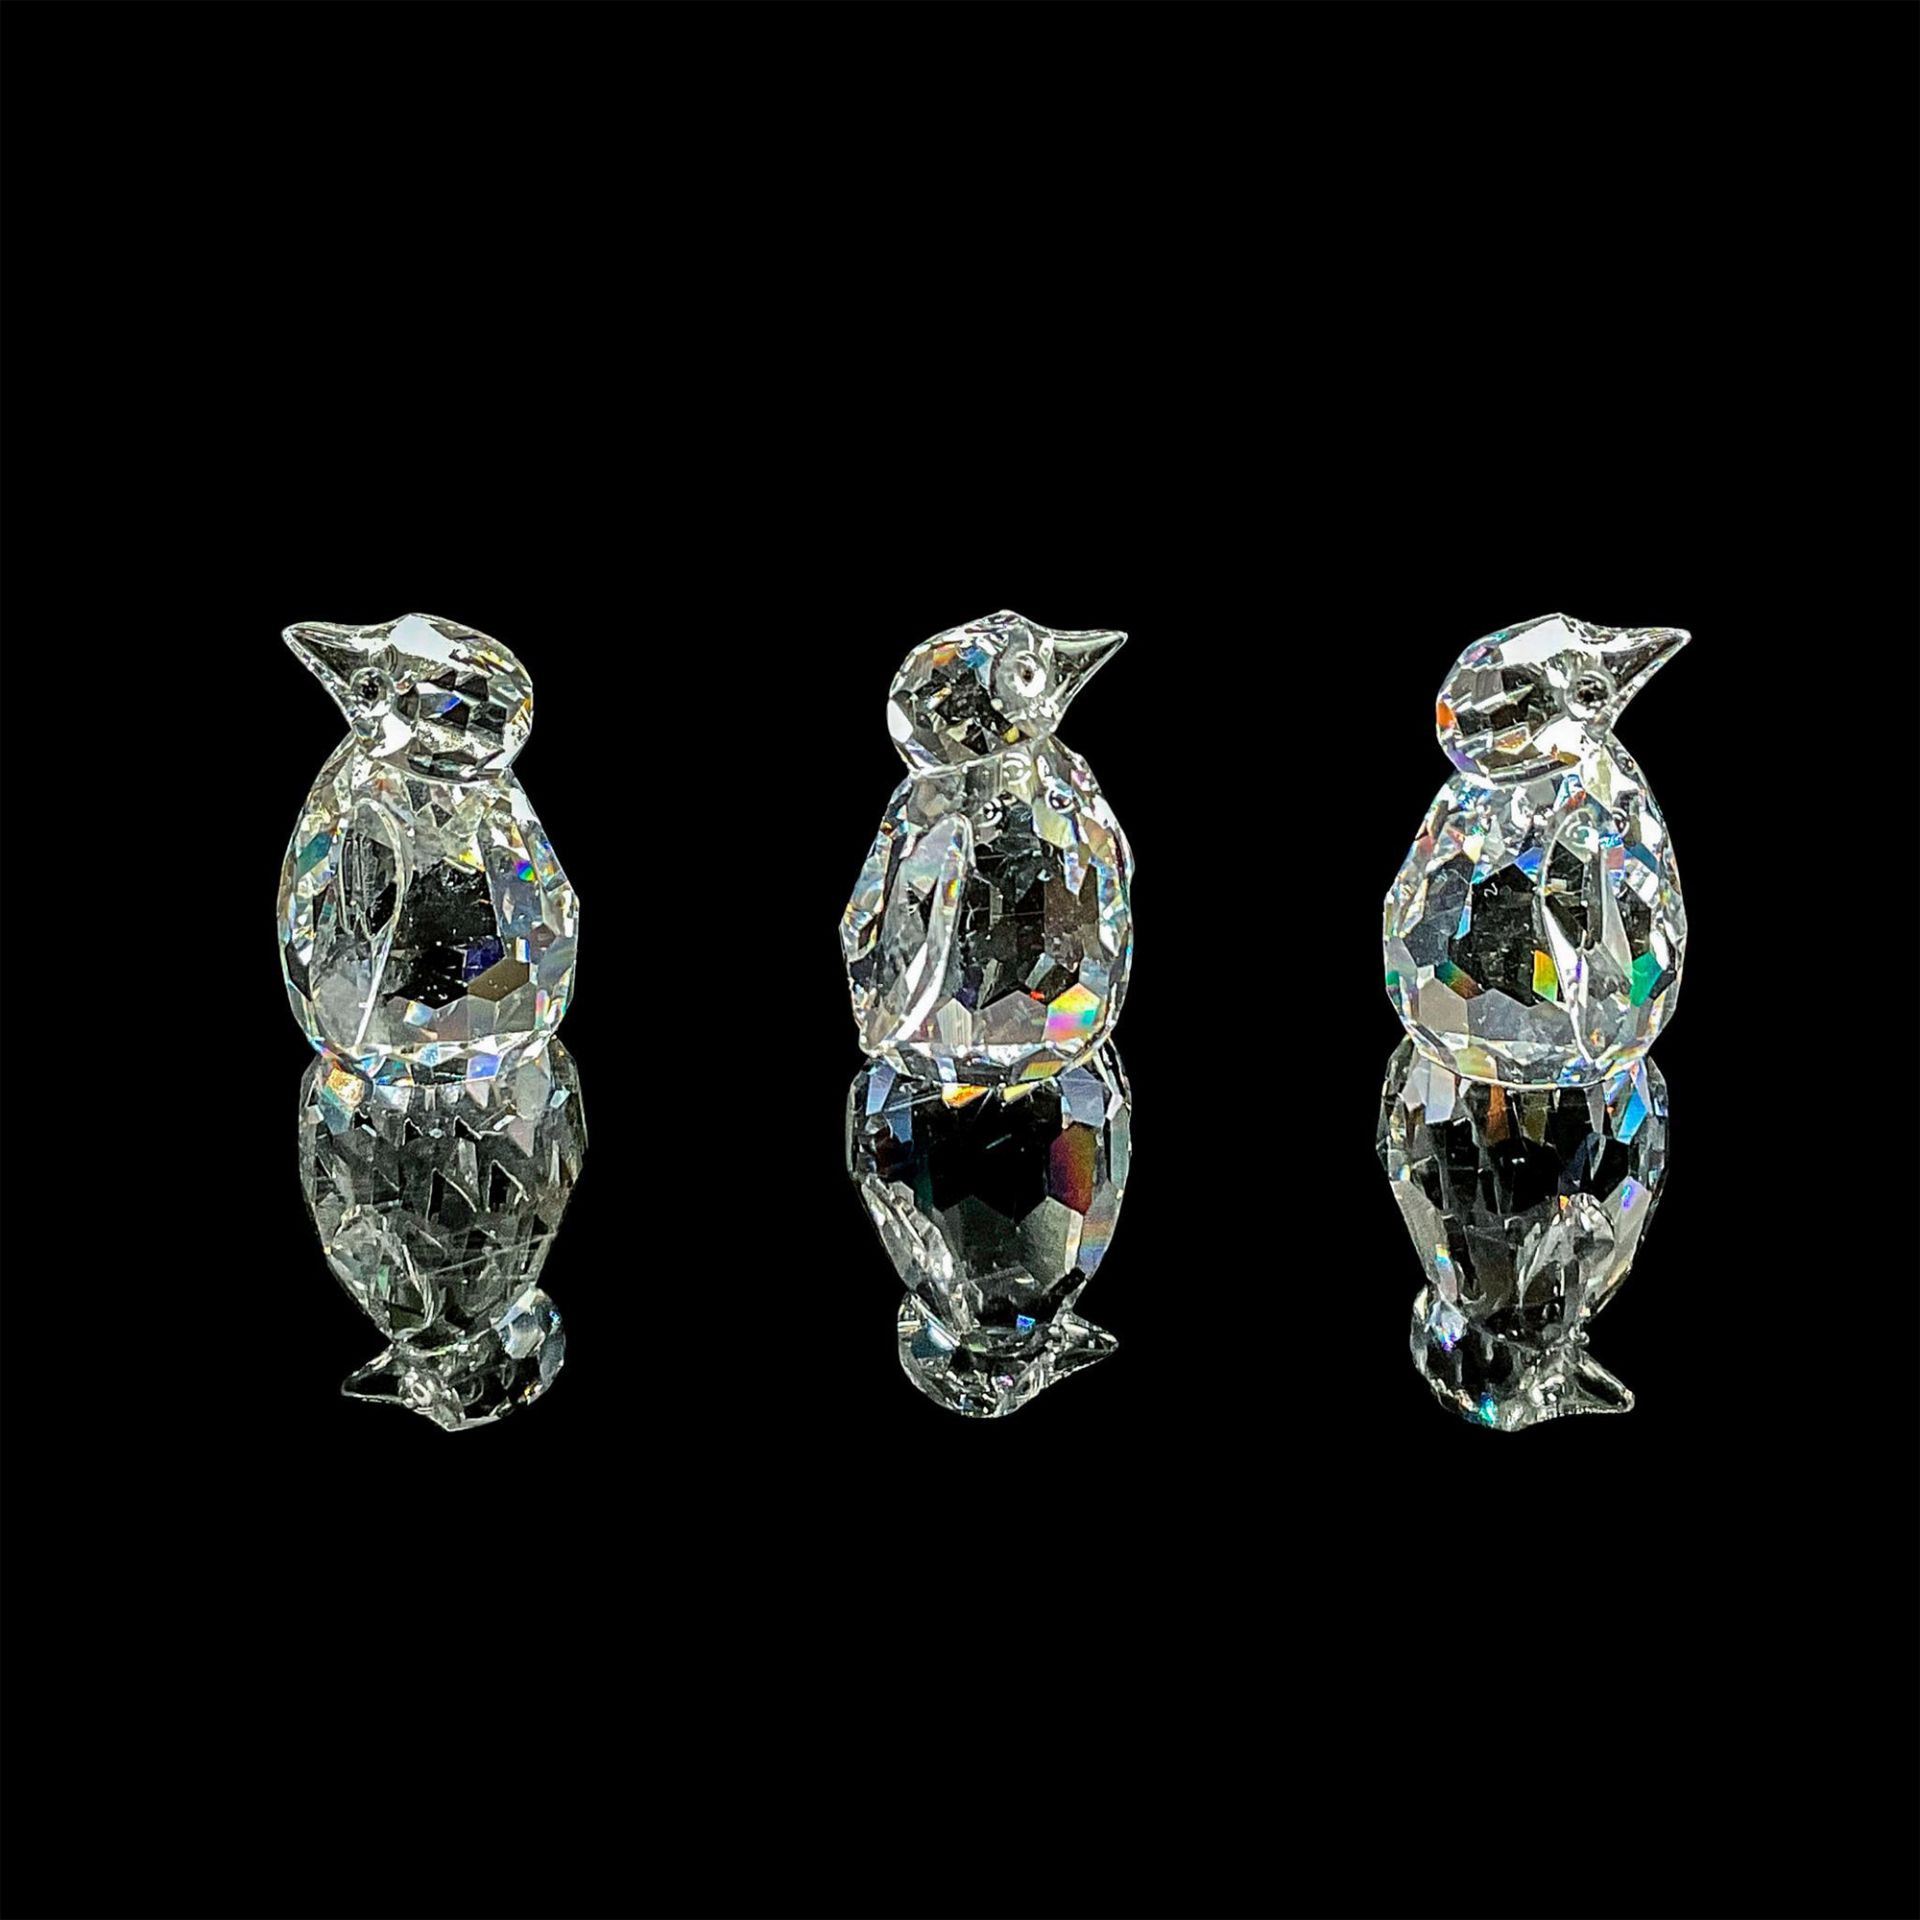 Swarovski Silver Crystal Figurines, Baby Penguins - Image 2 of 4